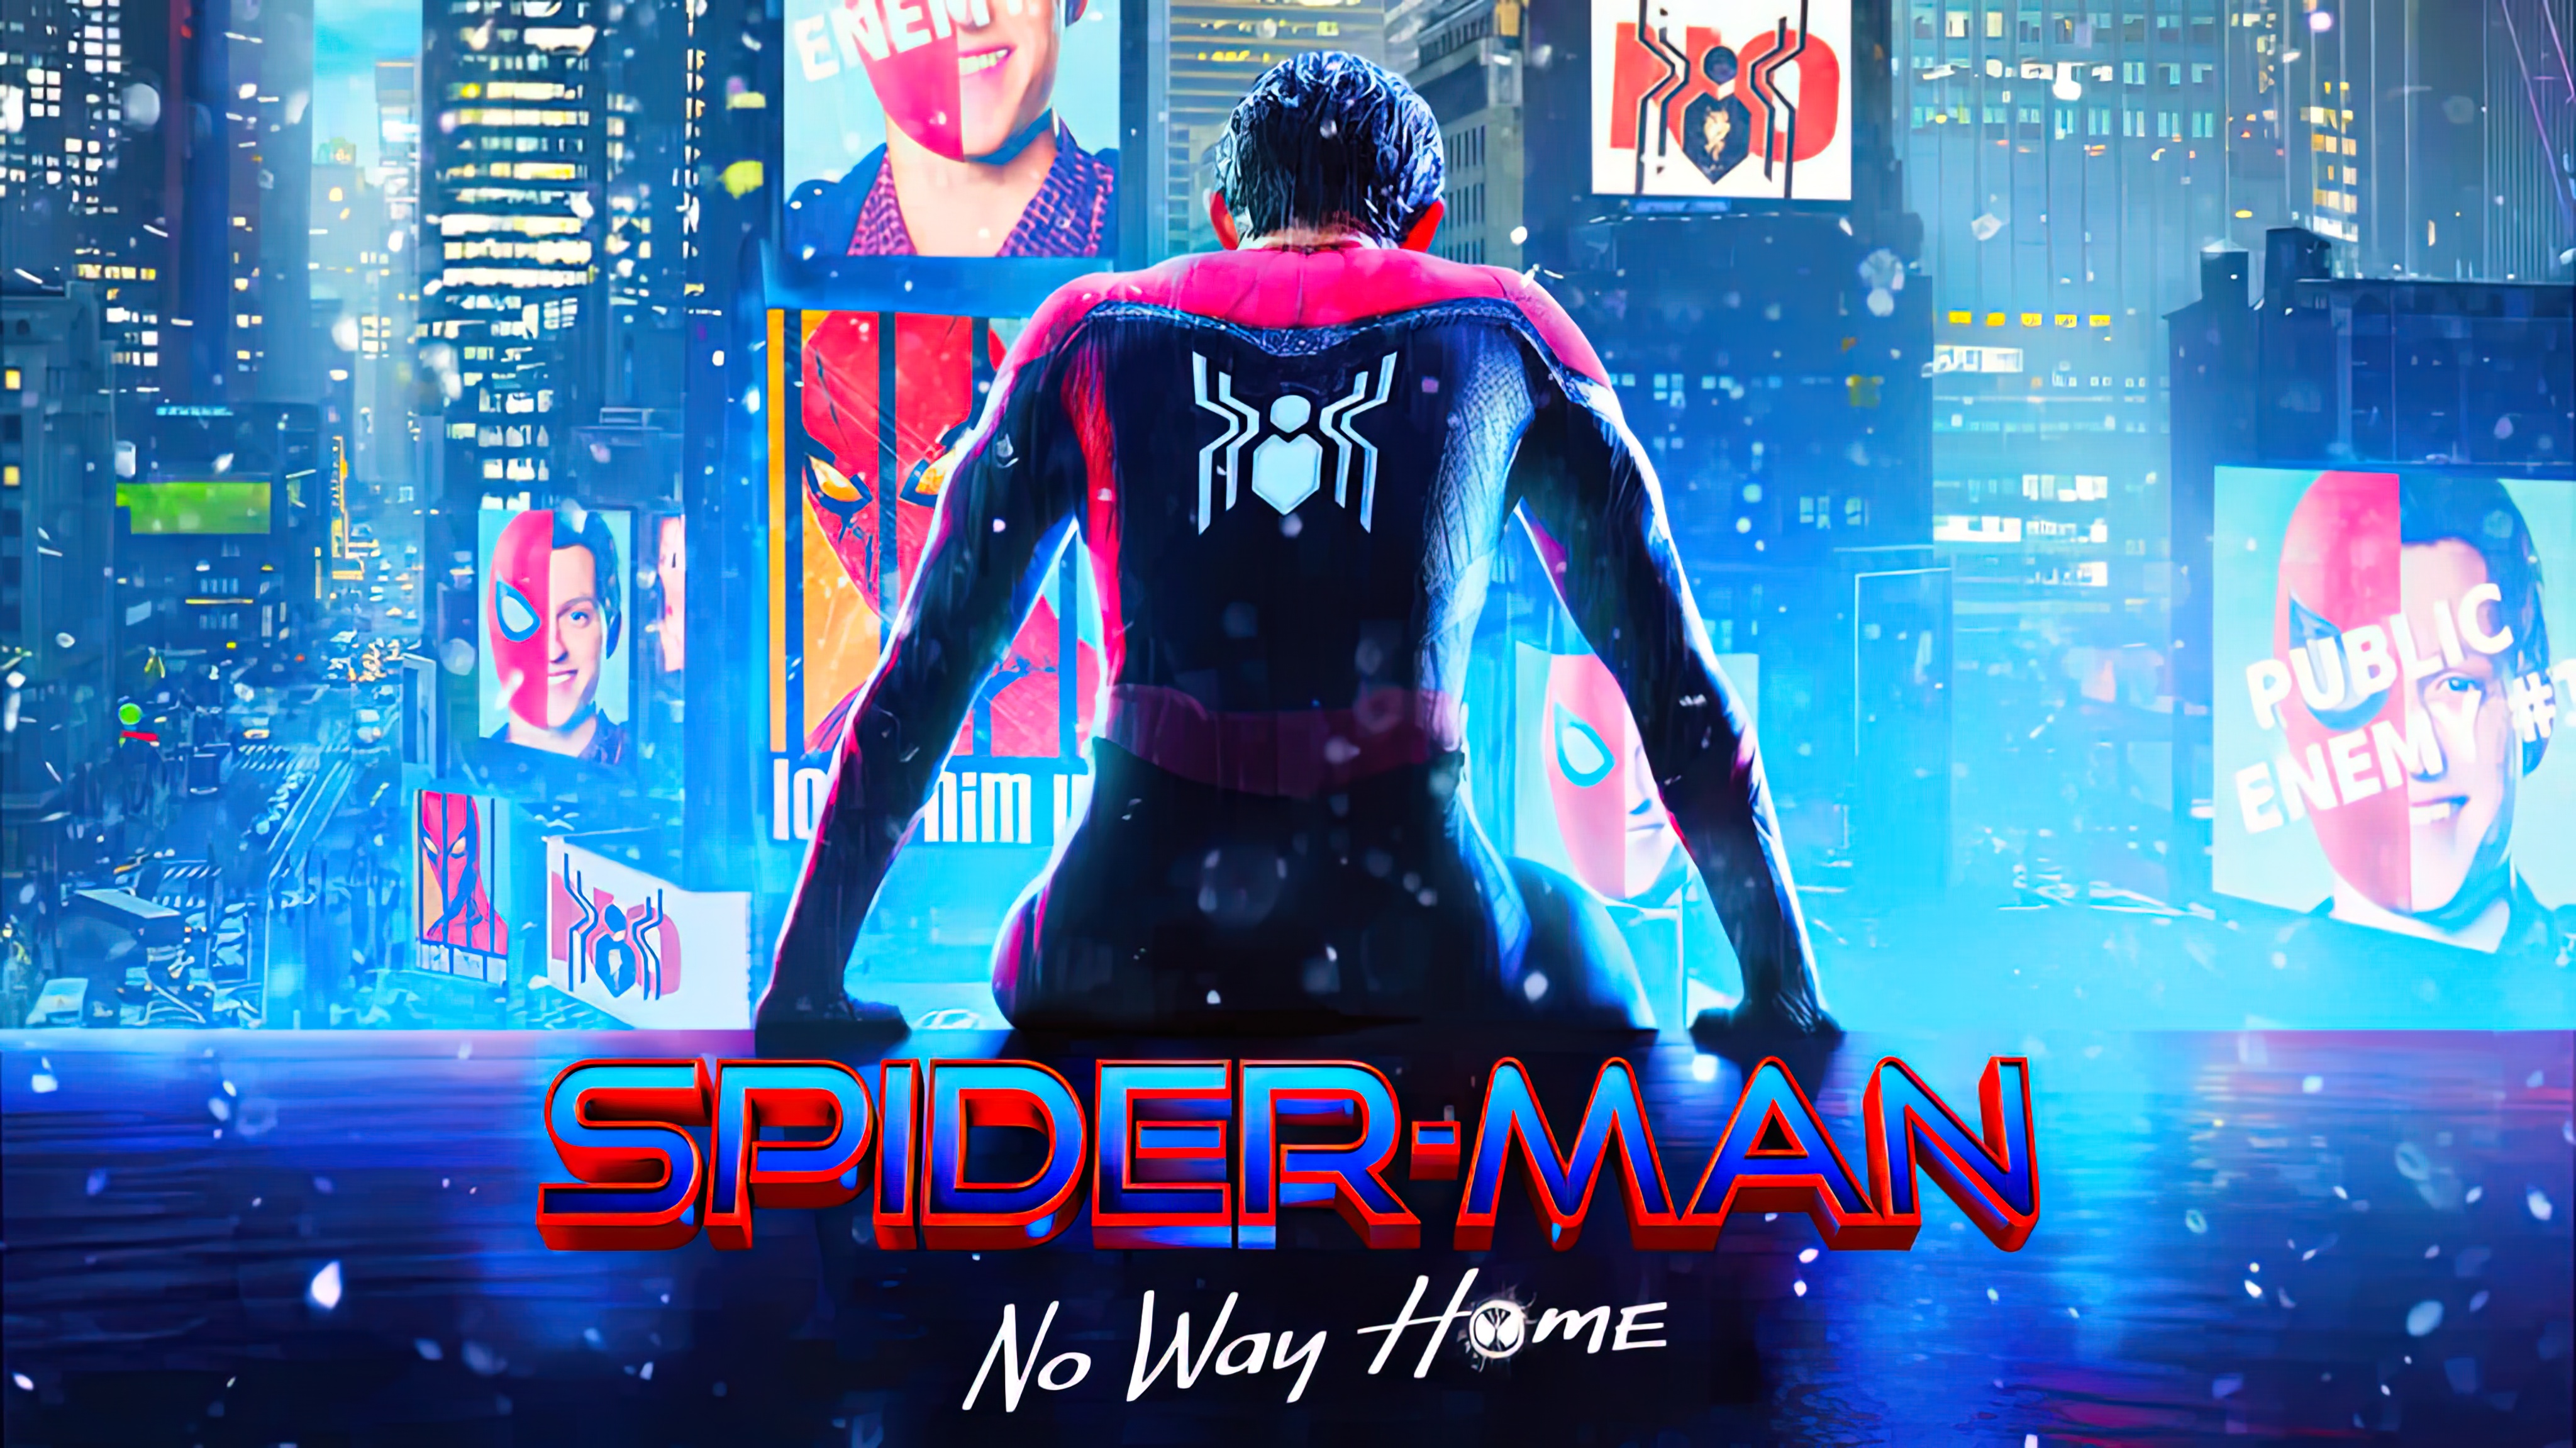 Spider-Man No Way Home (2022) (ฉบับพิเศษ)